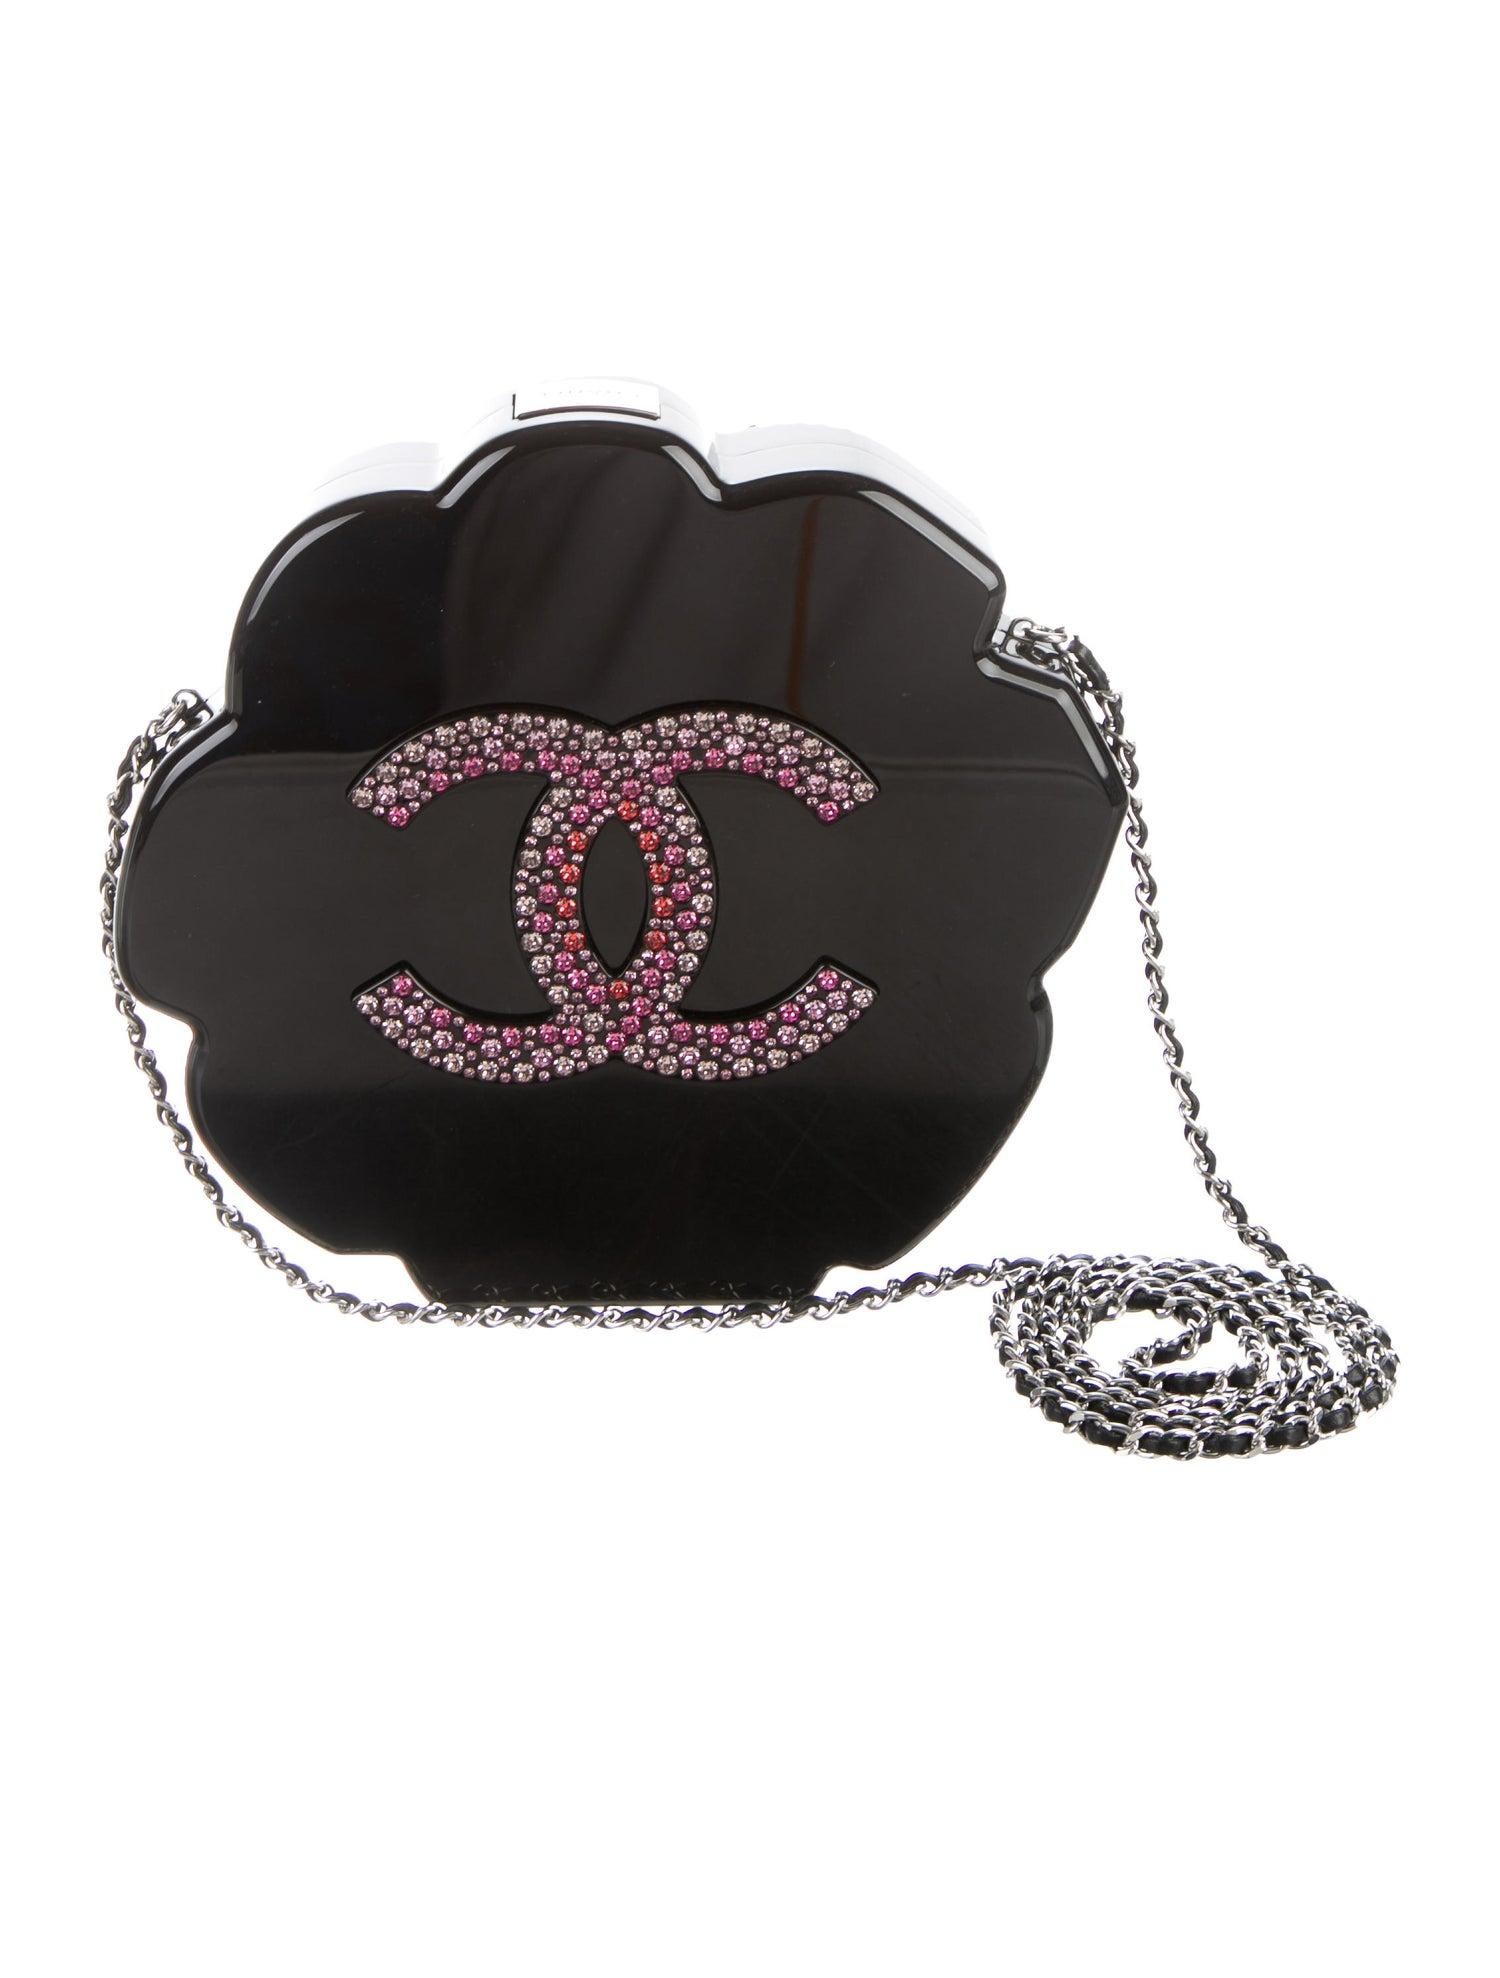 Brown Chanel Runway Black Resin Pink Strass Flower Evening Clutch Shoulder Bag in Box